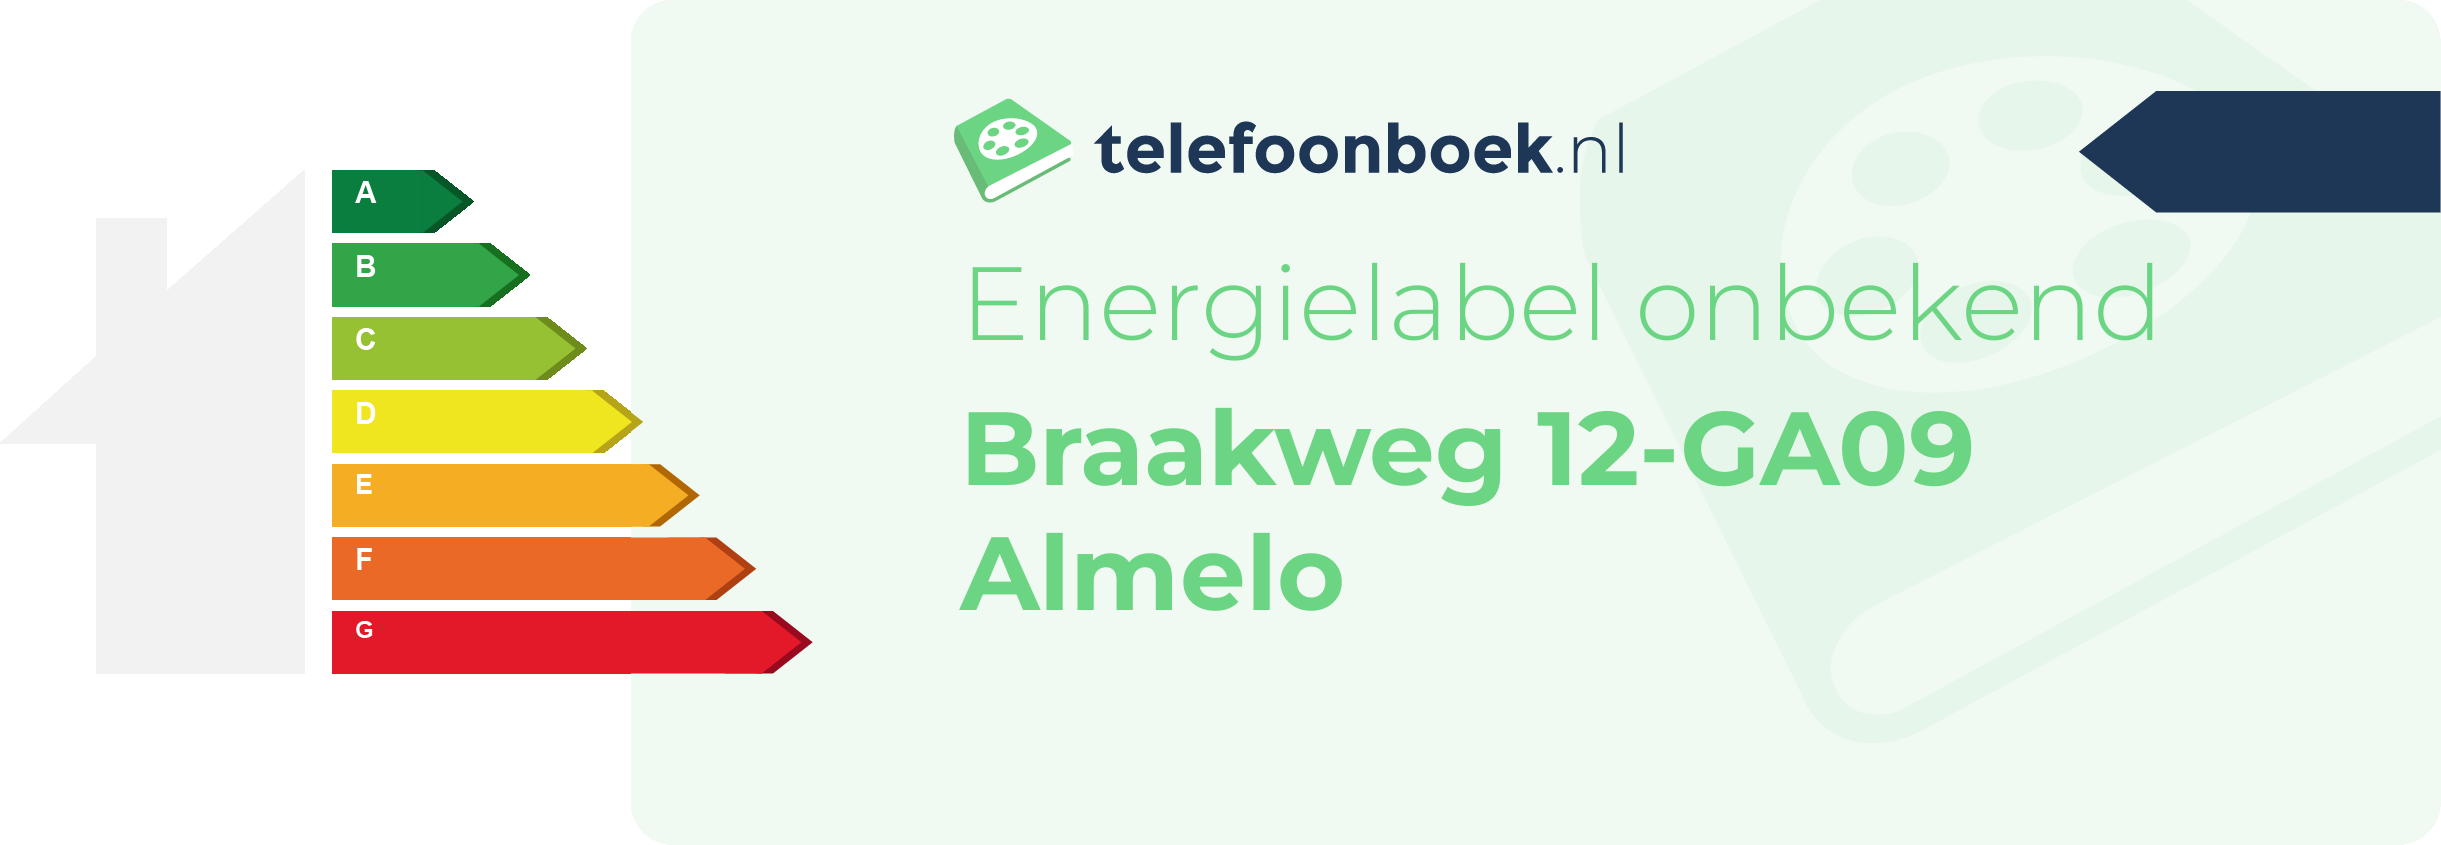 Energielabel Braakweg 12-GA09 Almelo